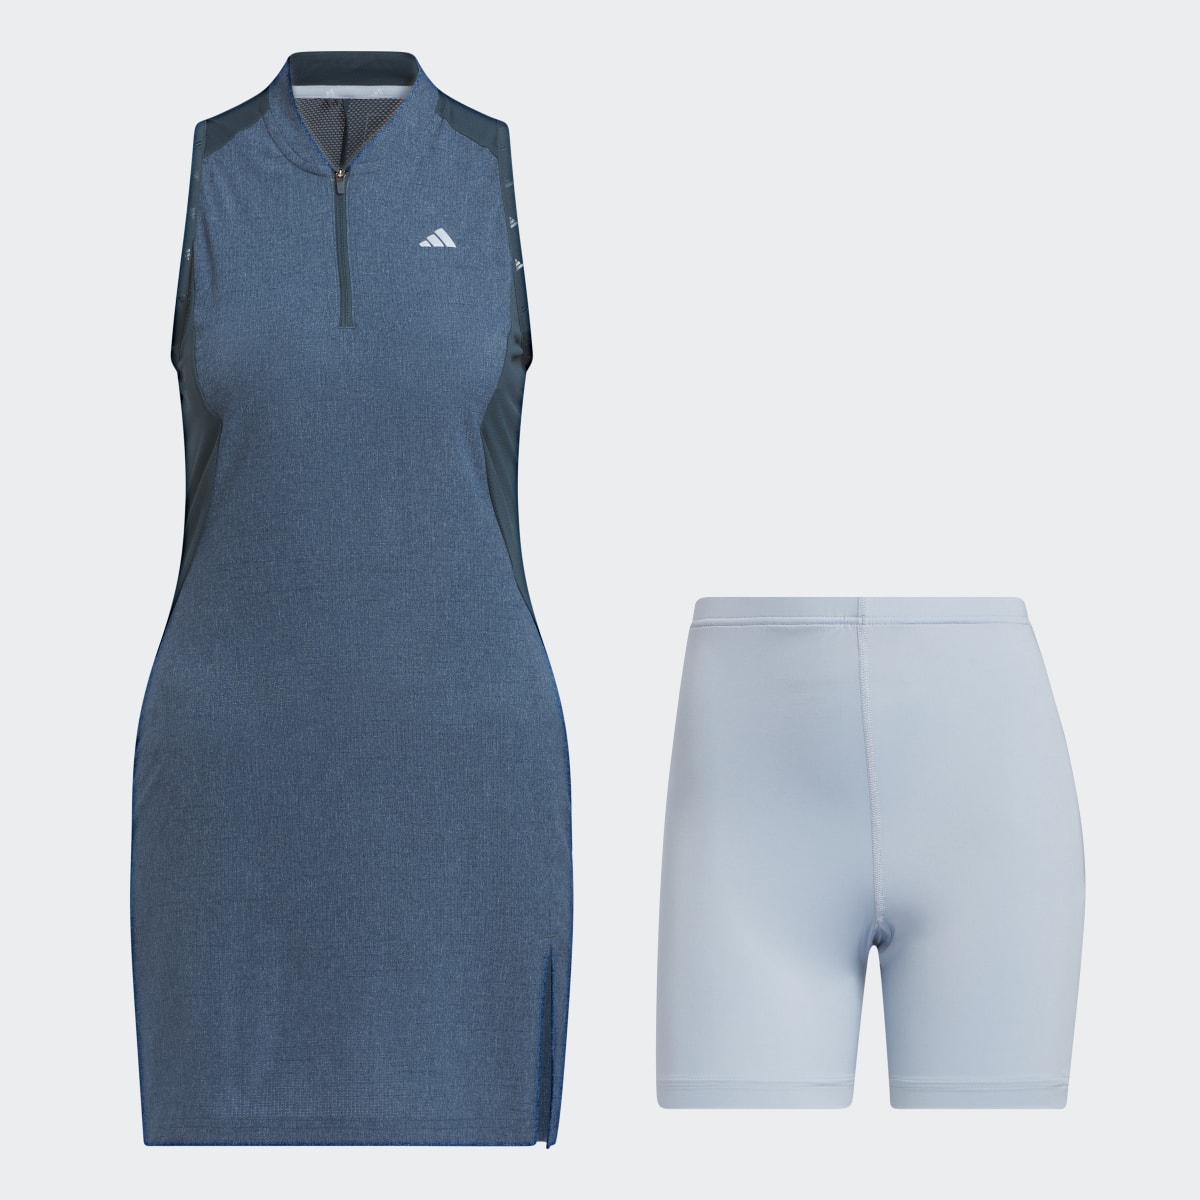 Adidas Ultimate365 Tour Sleeveless Golf Dress. 7